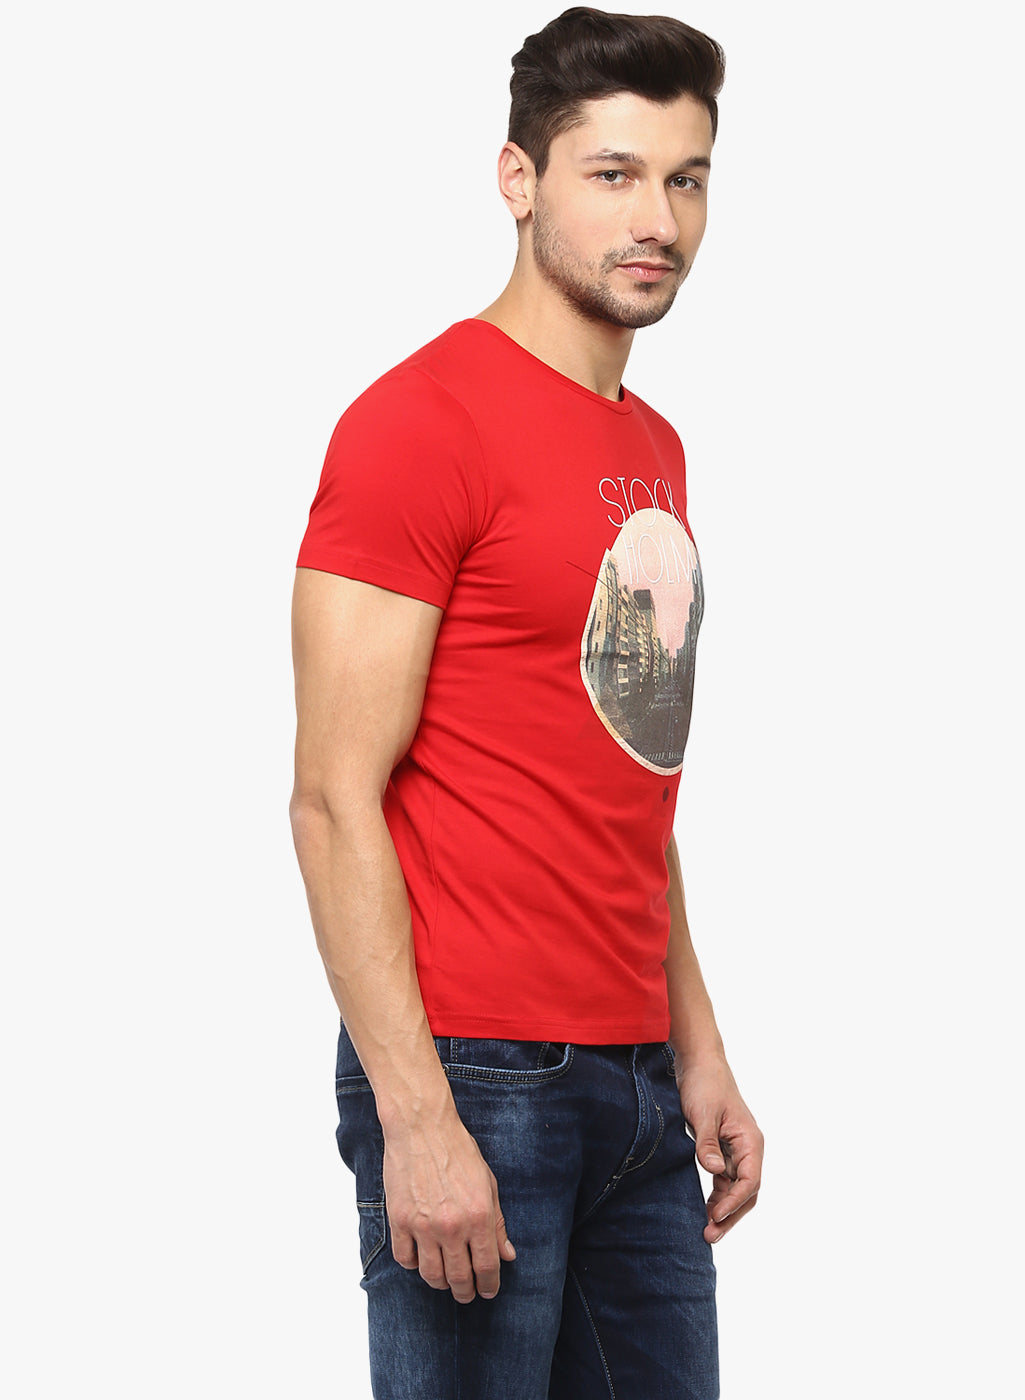 Red Graphic Printed T-Shirt - Men T-Shirts